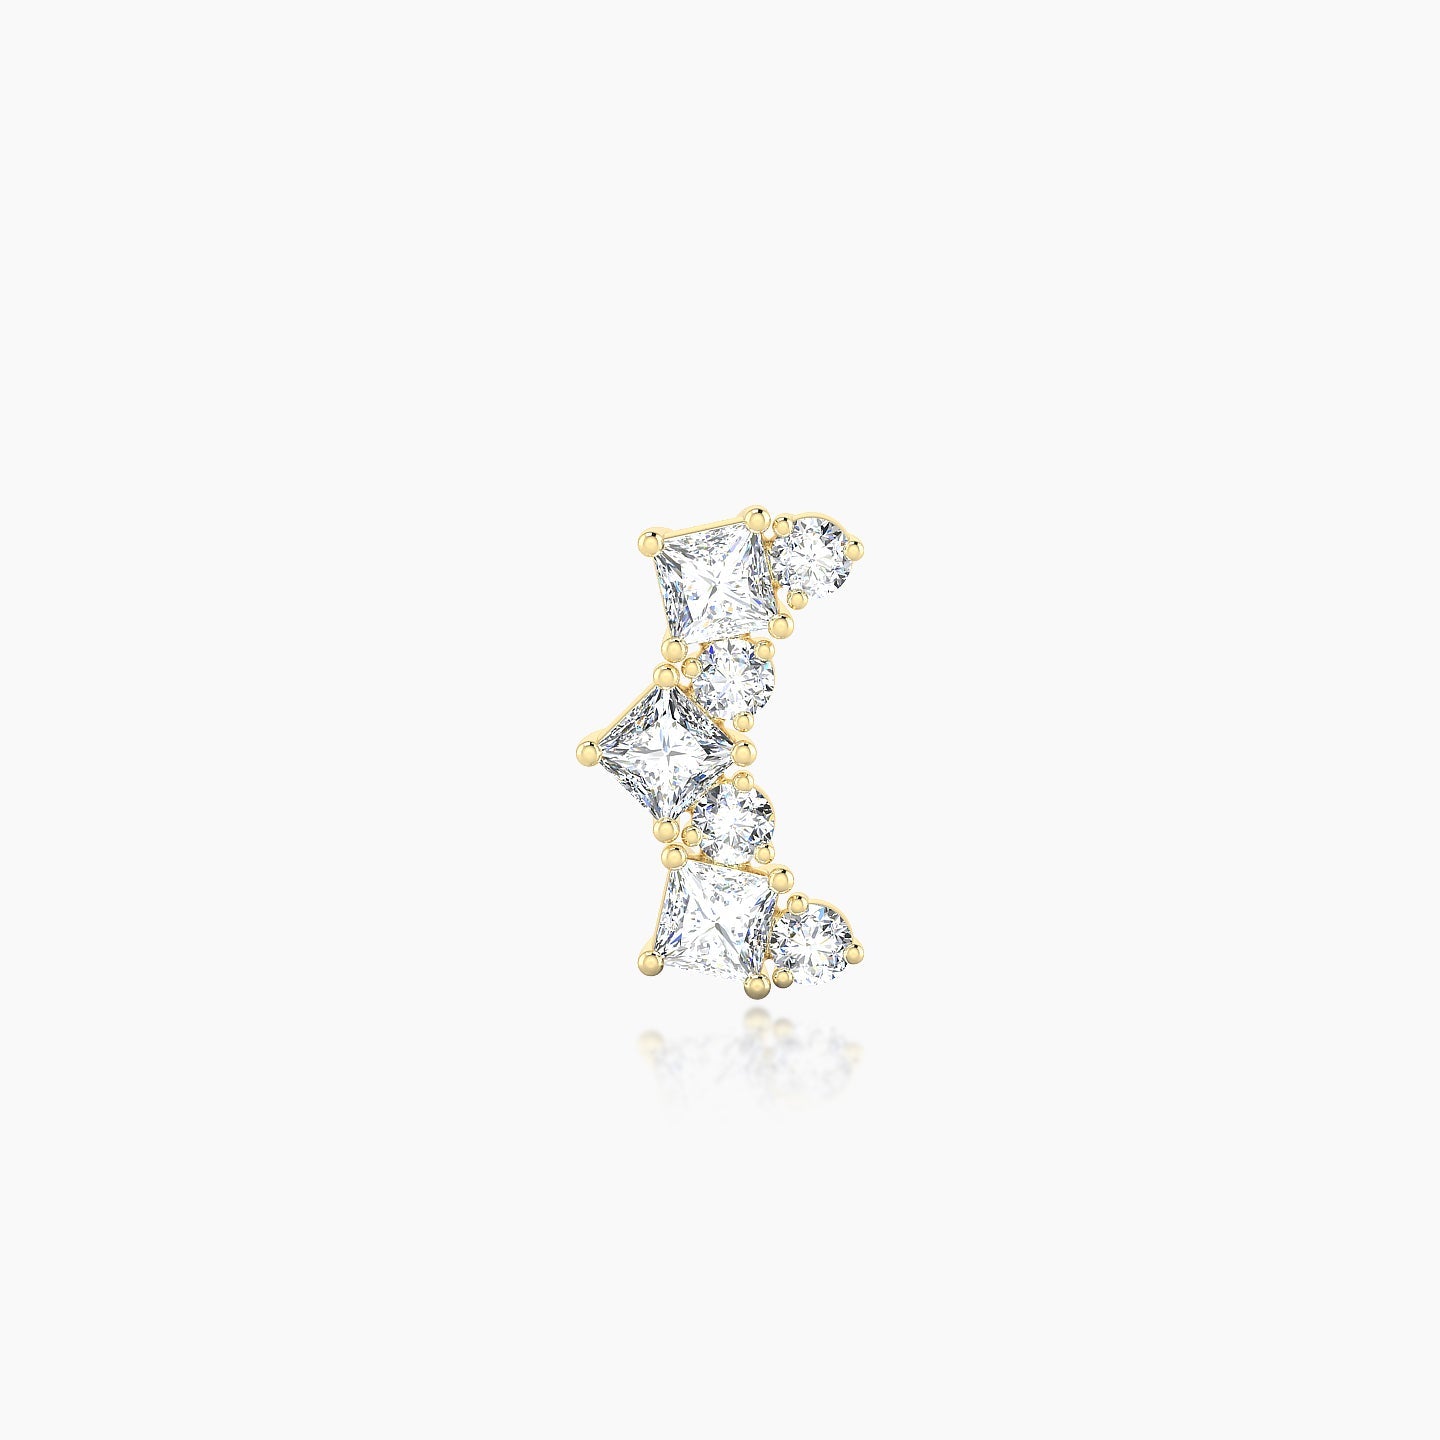 Ariana M | 18k Yellow Gold 9.5 mm Diamond Piercing